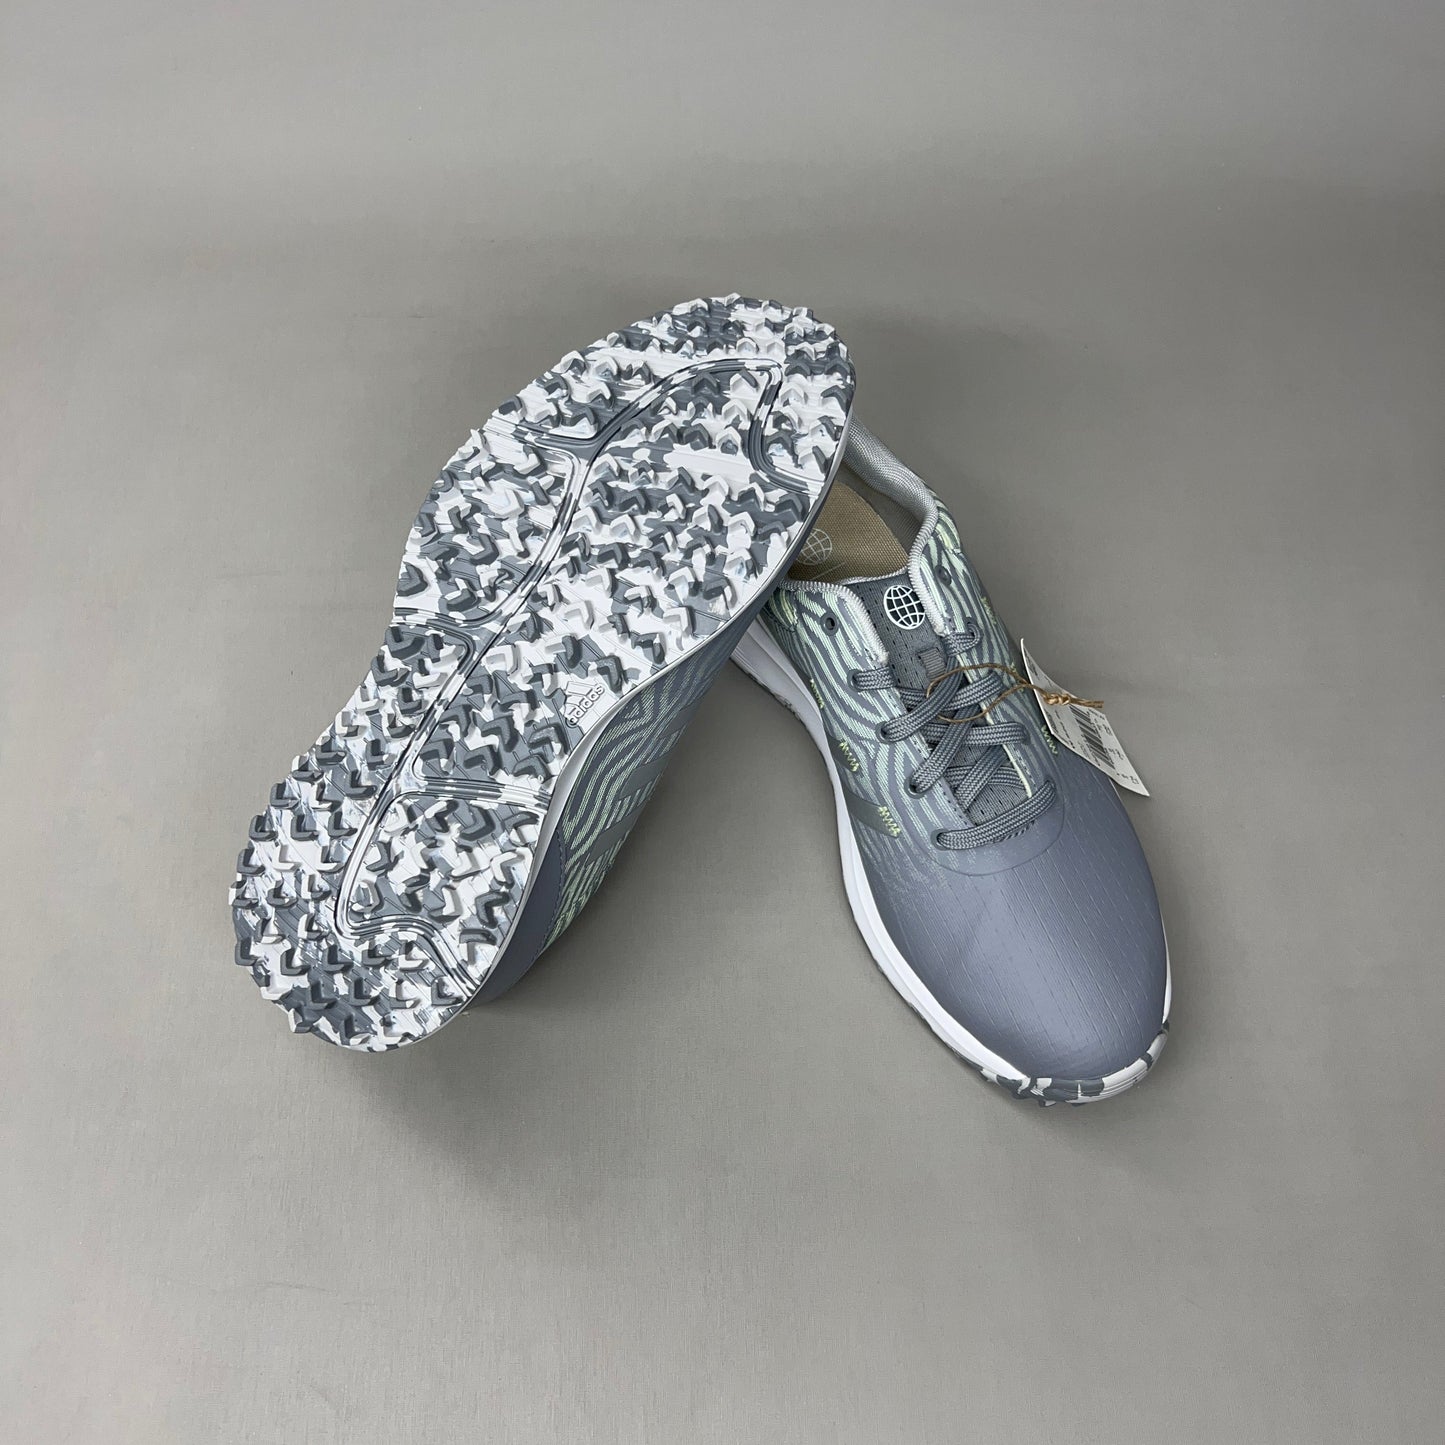 ADIDAS Golf Shoes W S2G SL Waterproof Women's Sz 8.5 Grey / Lime GZ3911 (New)